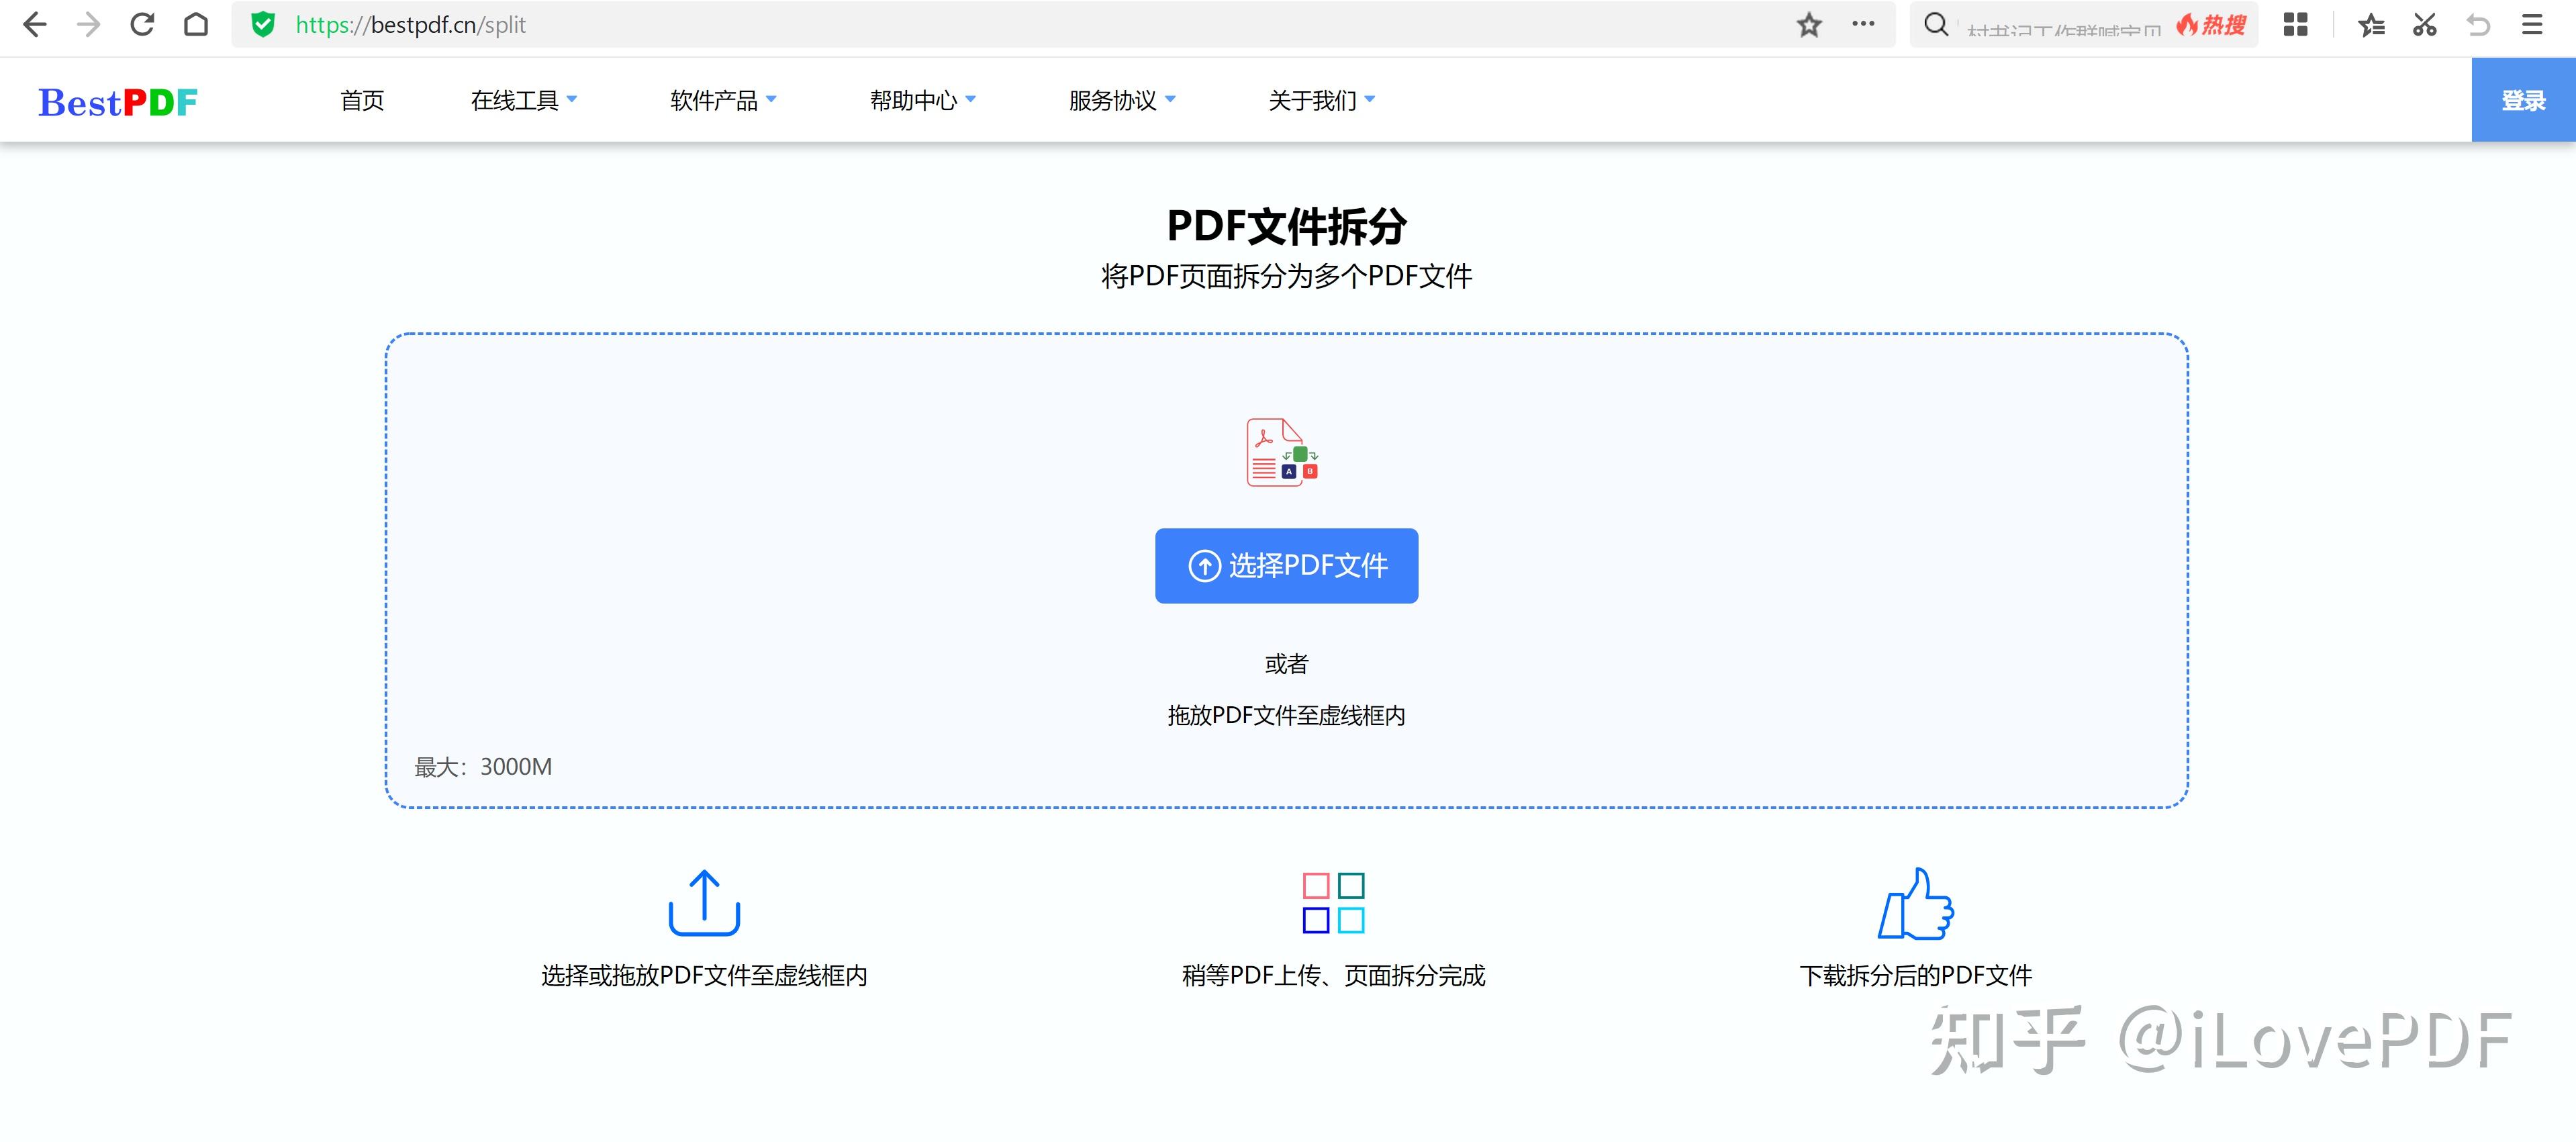 Boxtwo北京播图科技有限公司 | HDMI2.0画面分割器